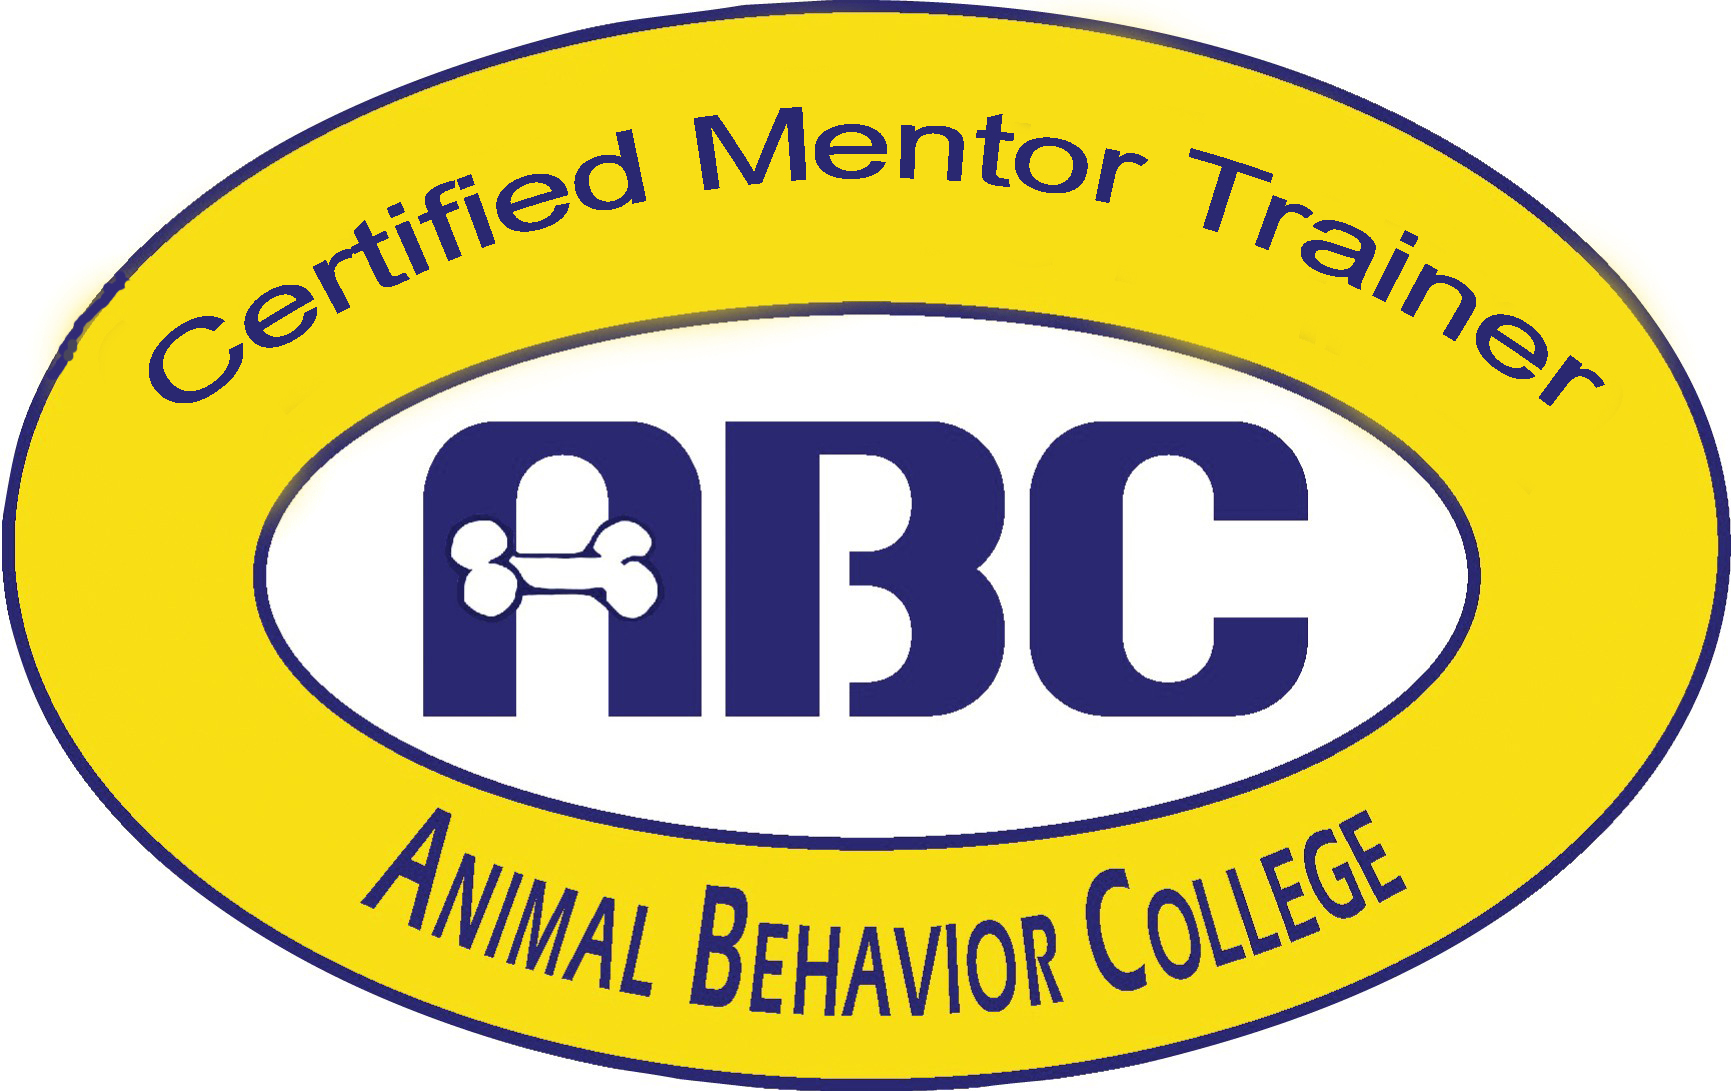 Certified Mentor Trainer logo copy